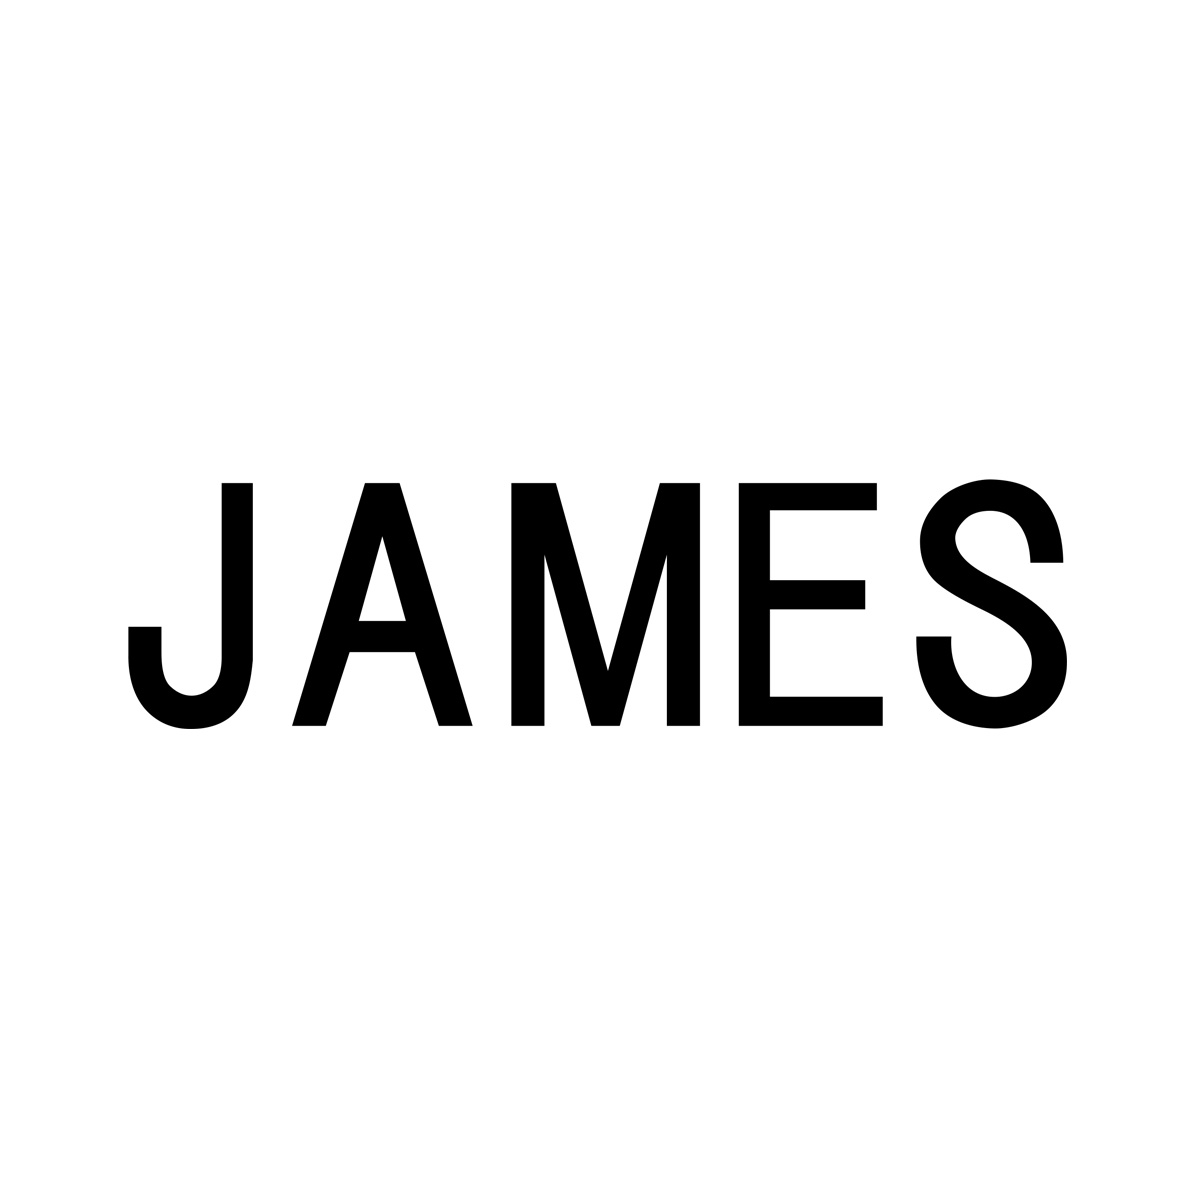 JAMES